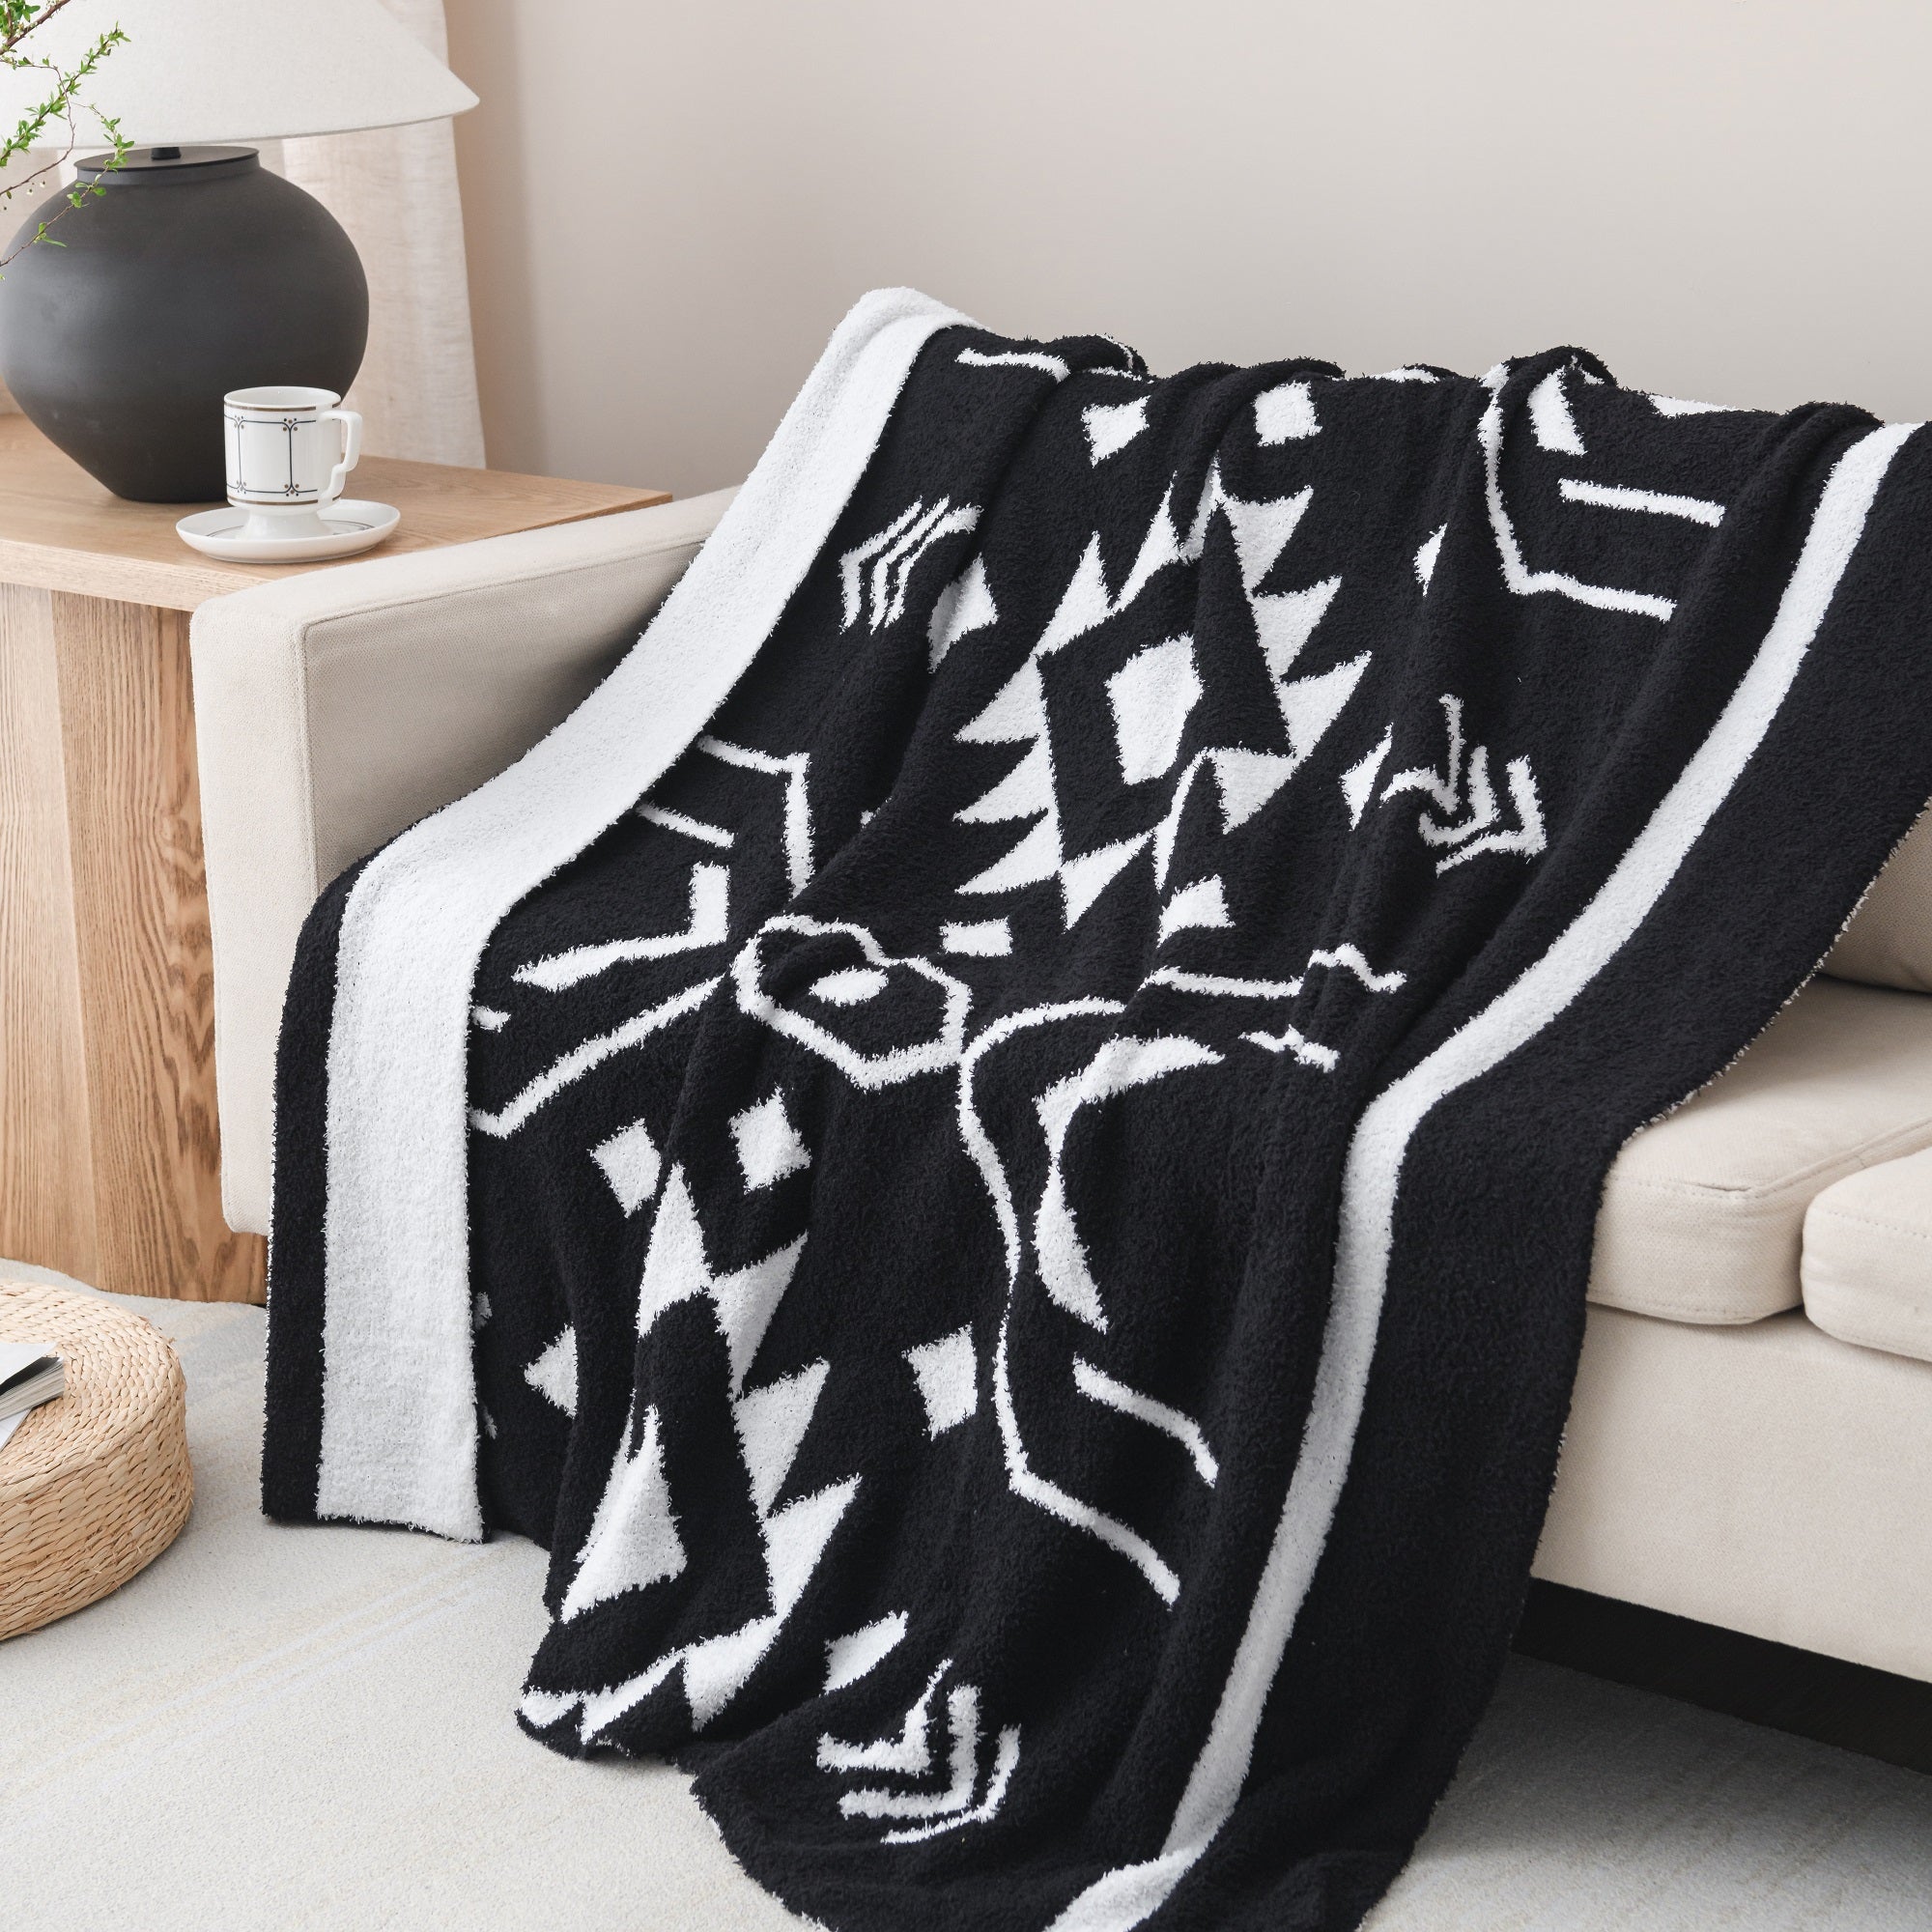 Jacquard Knit Throw Throw Blanket 50 x 60 inches Black